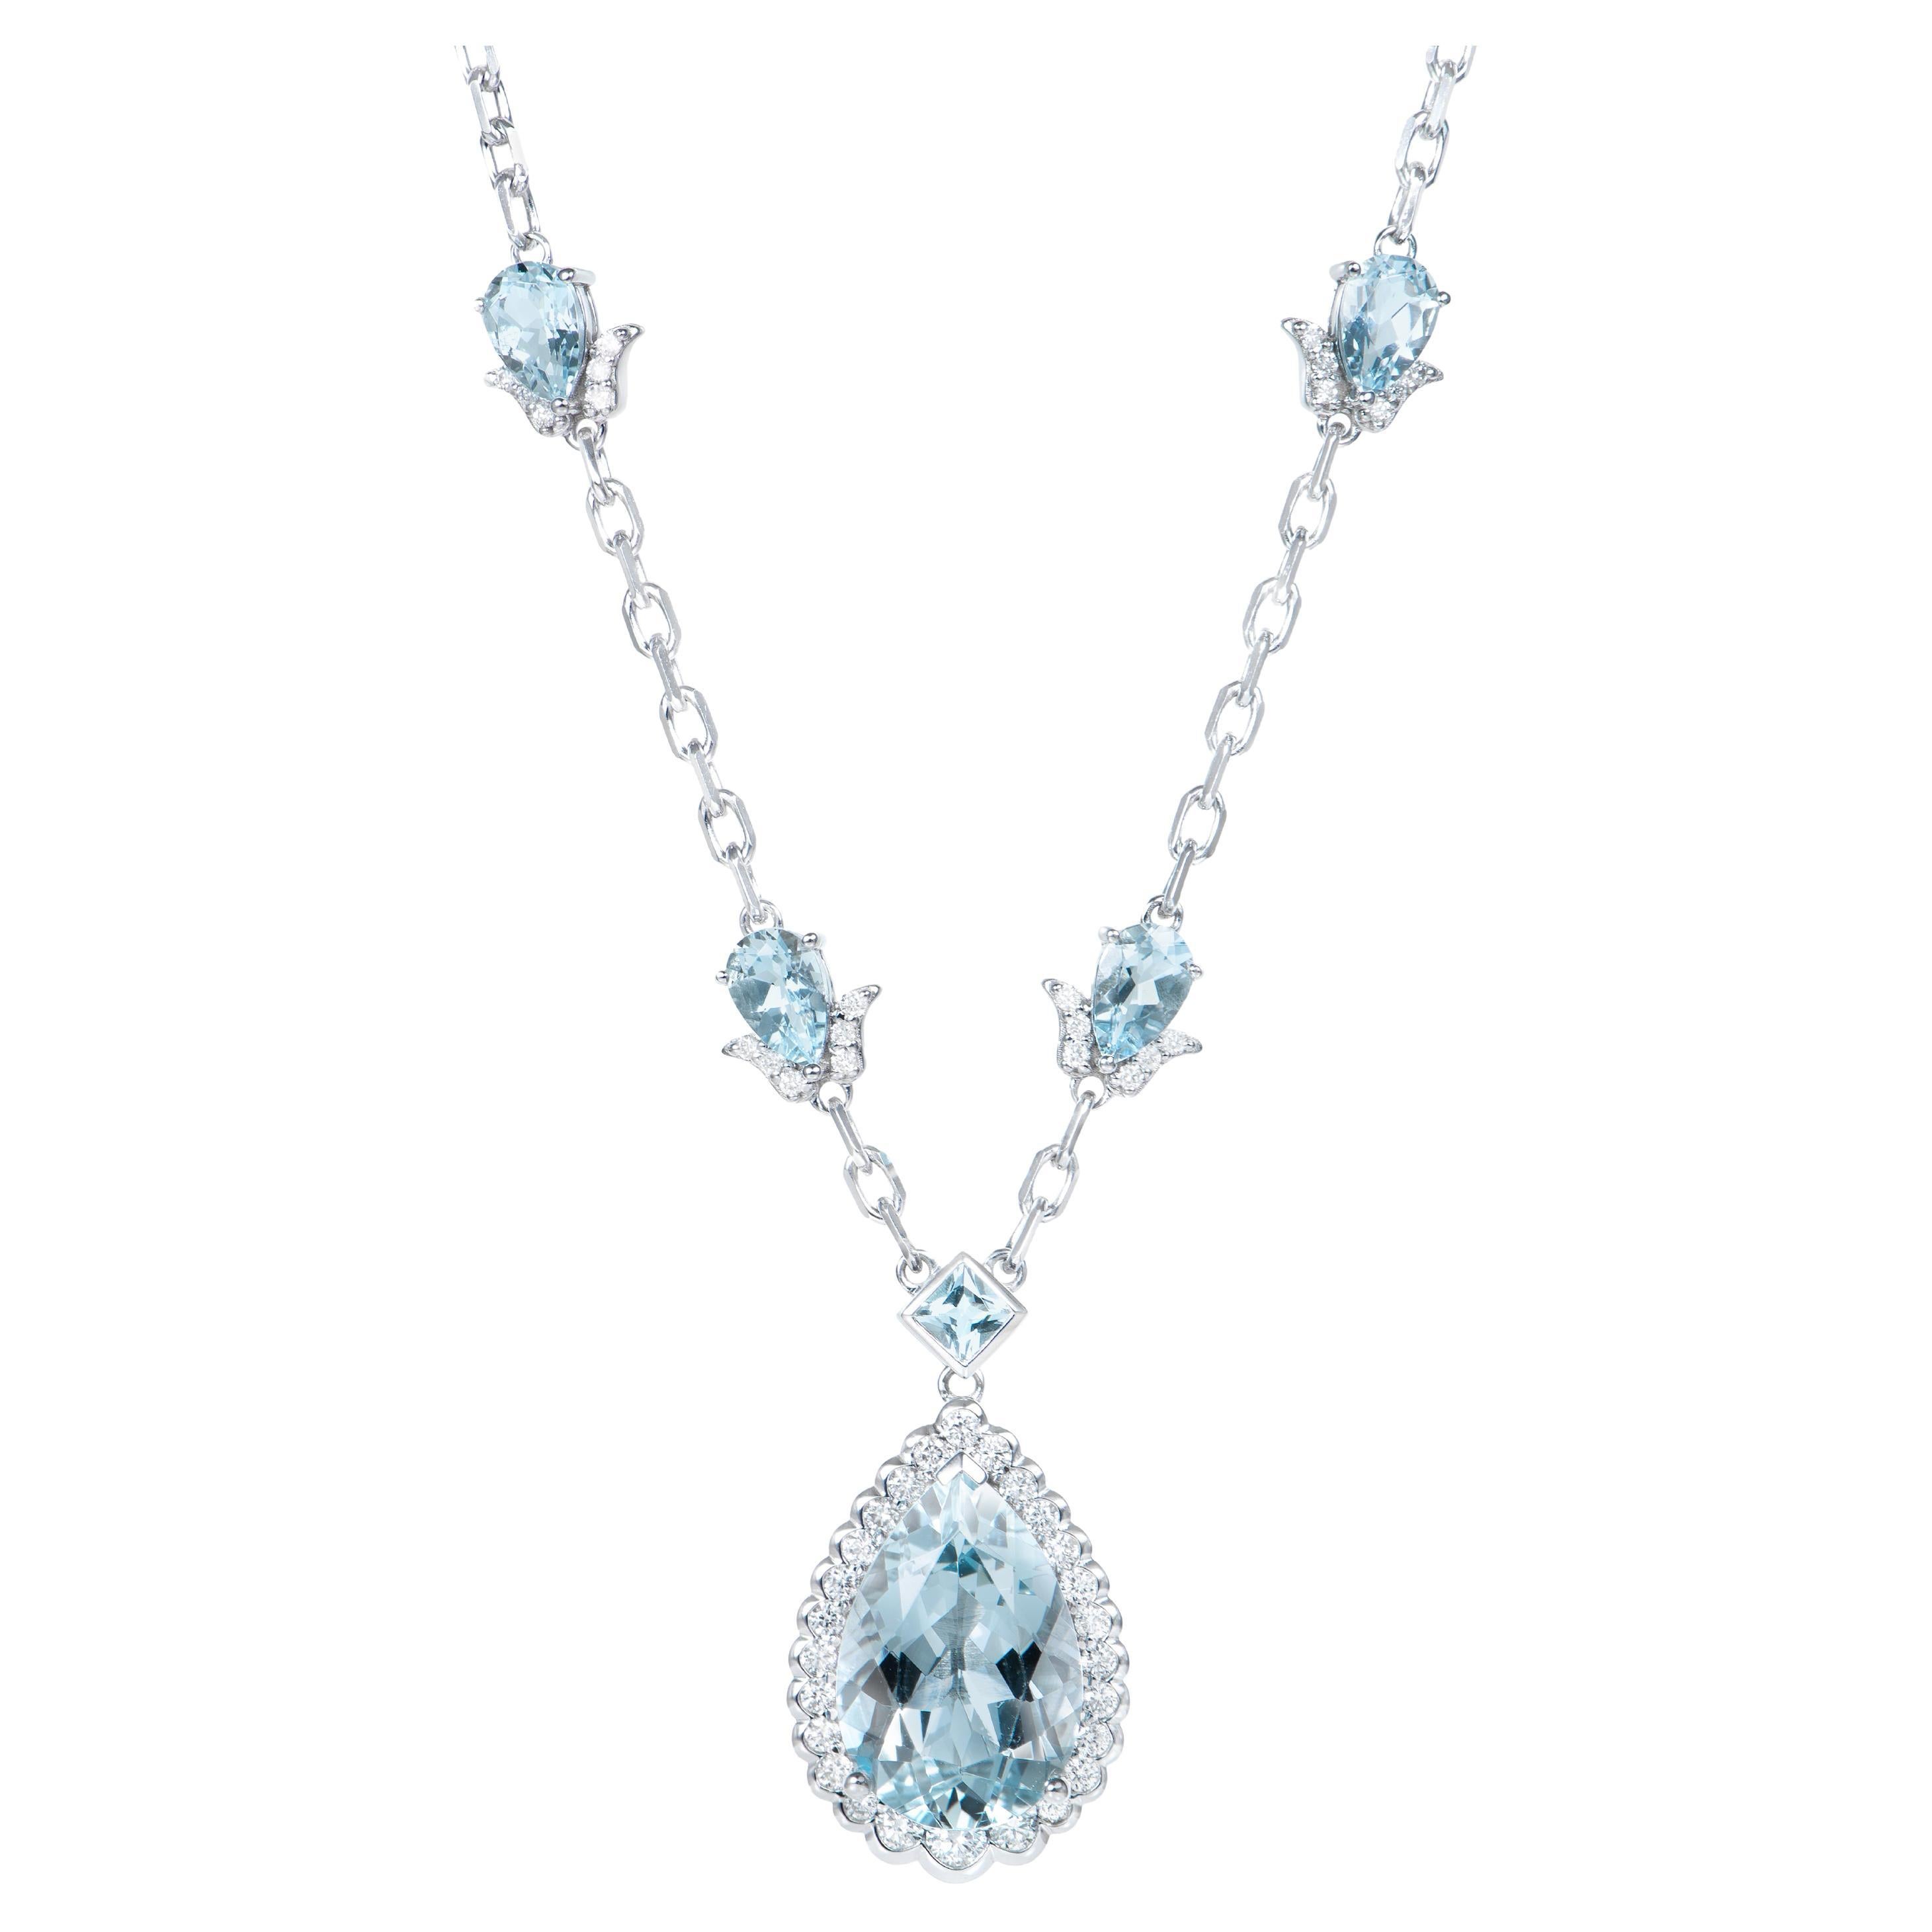 Aquamarine Pendant with White Diamond in 18 Karat White Gold. For Sale